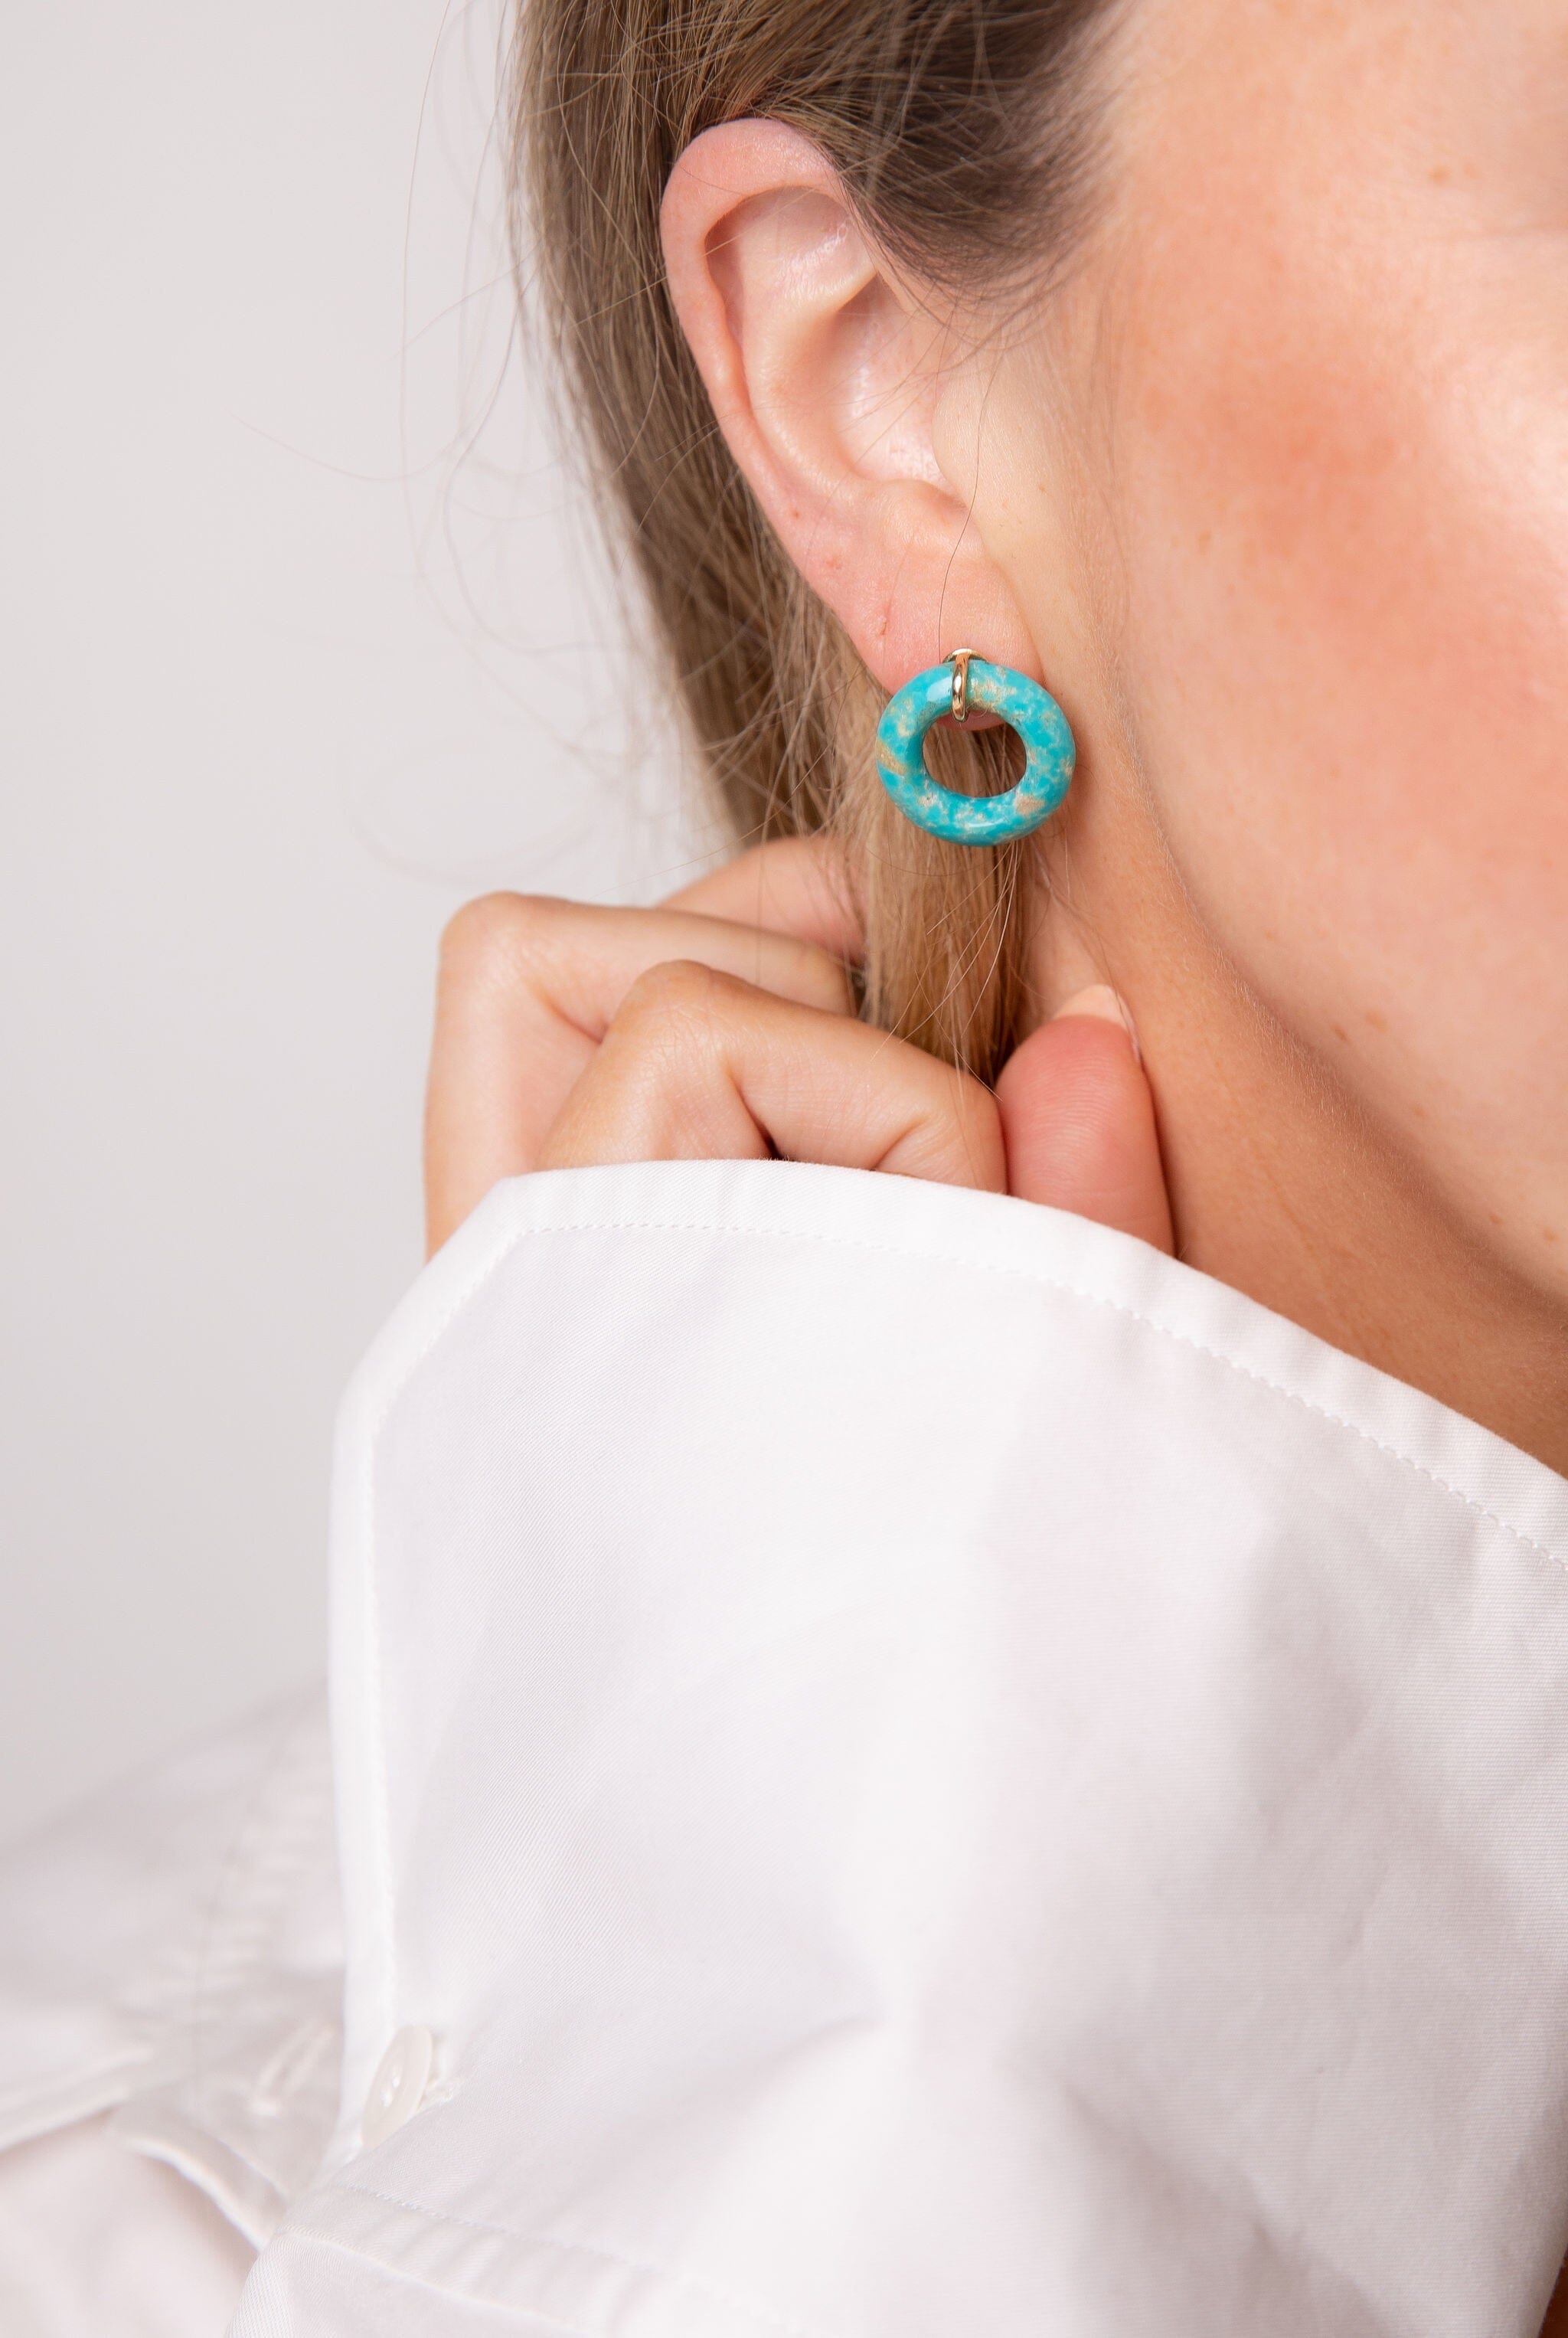 Cotton Candy Munchkin Studs Earrings - BONDEYE JEWELRY ®